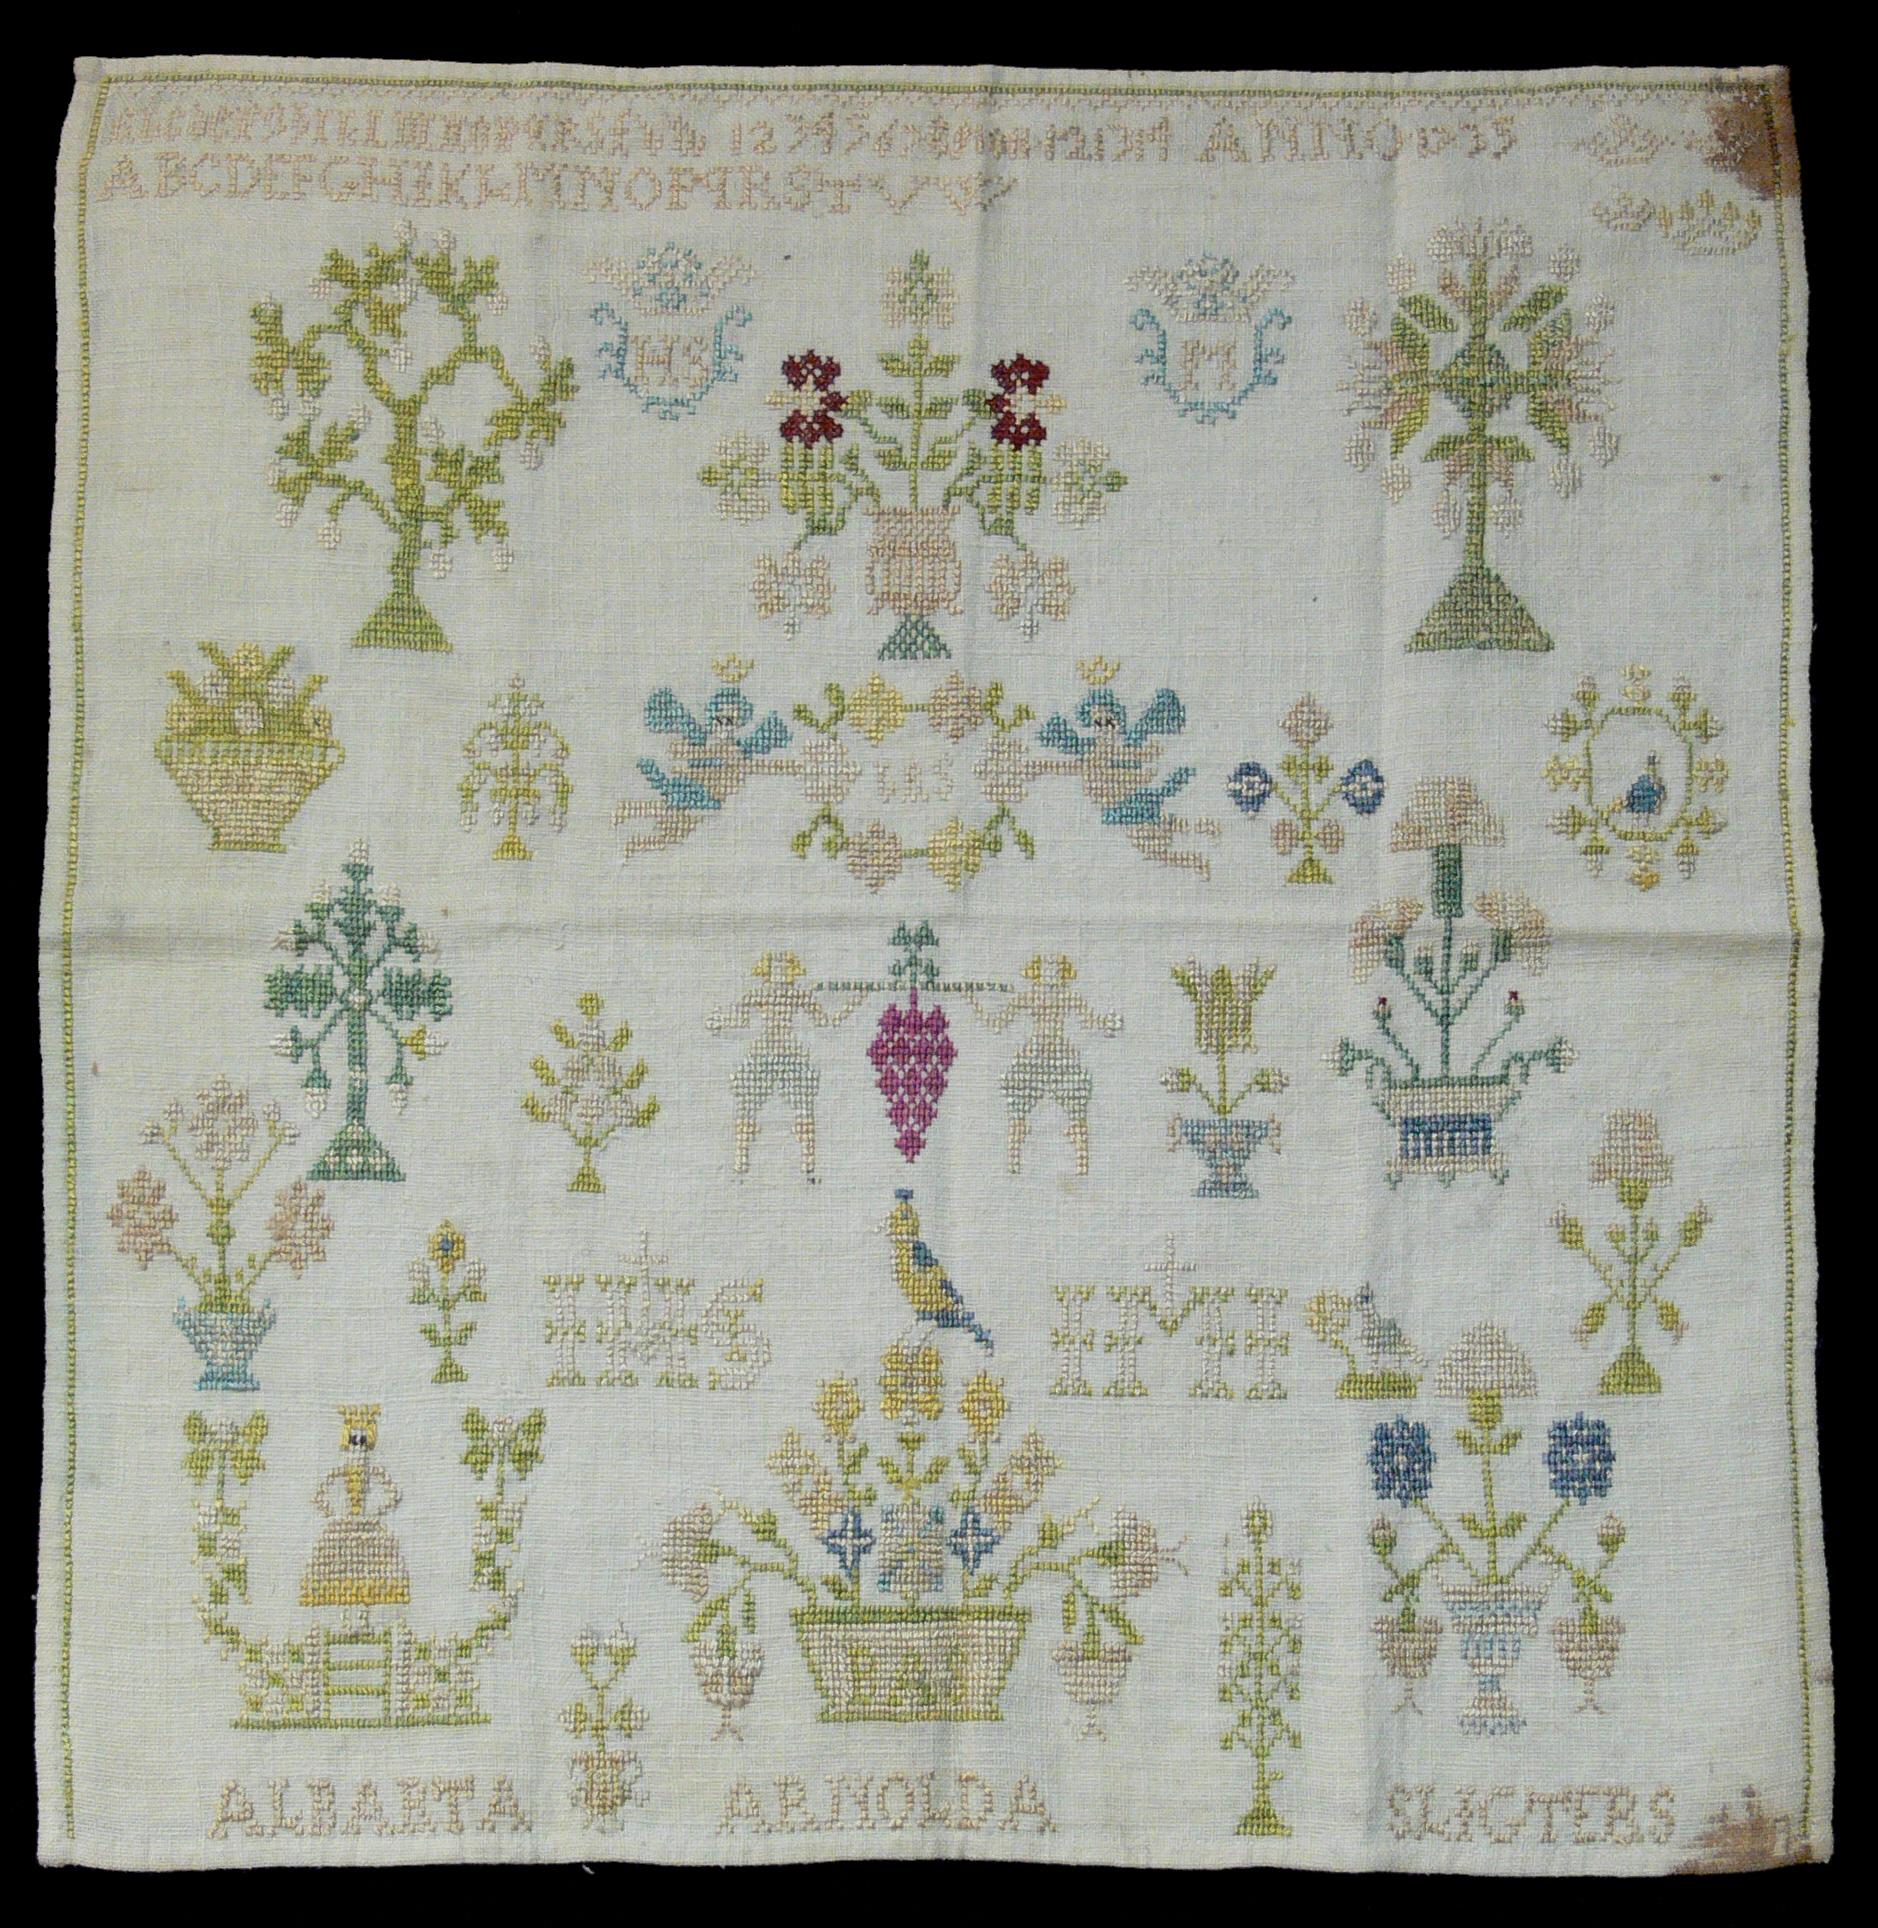 Hardanger Embroidery Patterns Online Free Cross Stitch Wikipedia